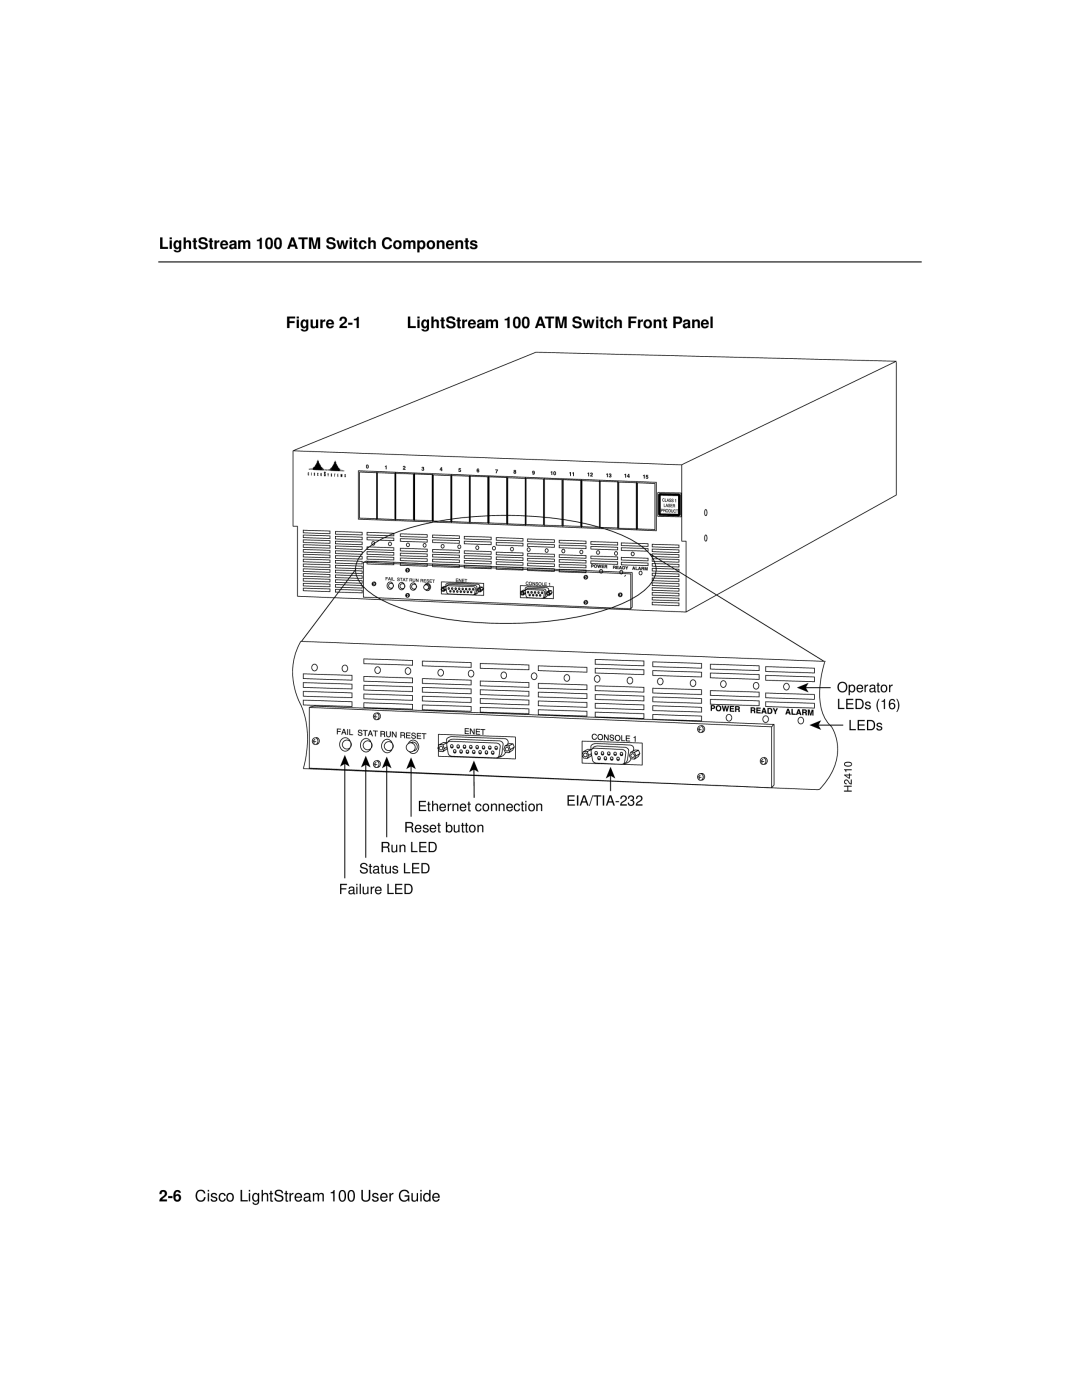 Cisco Systems manual LightStream 100 ATM Switch Components, 1 LightStream 100 ATM Switch Front Panel, Operator LEDs LEDs 